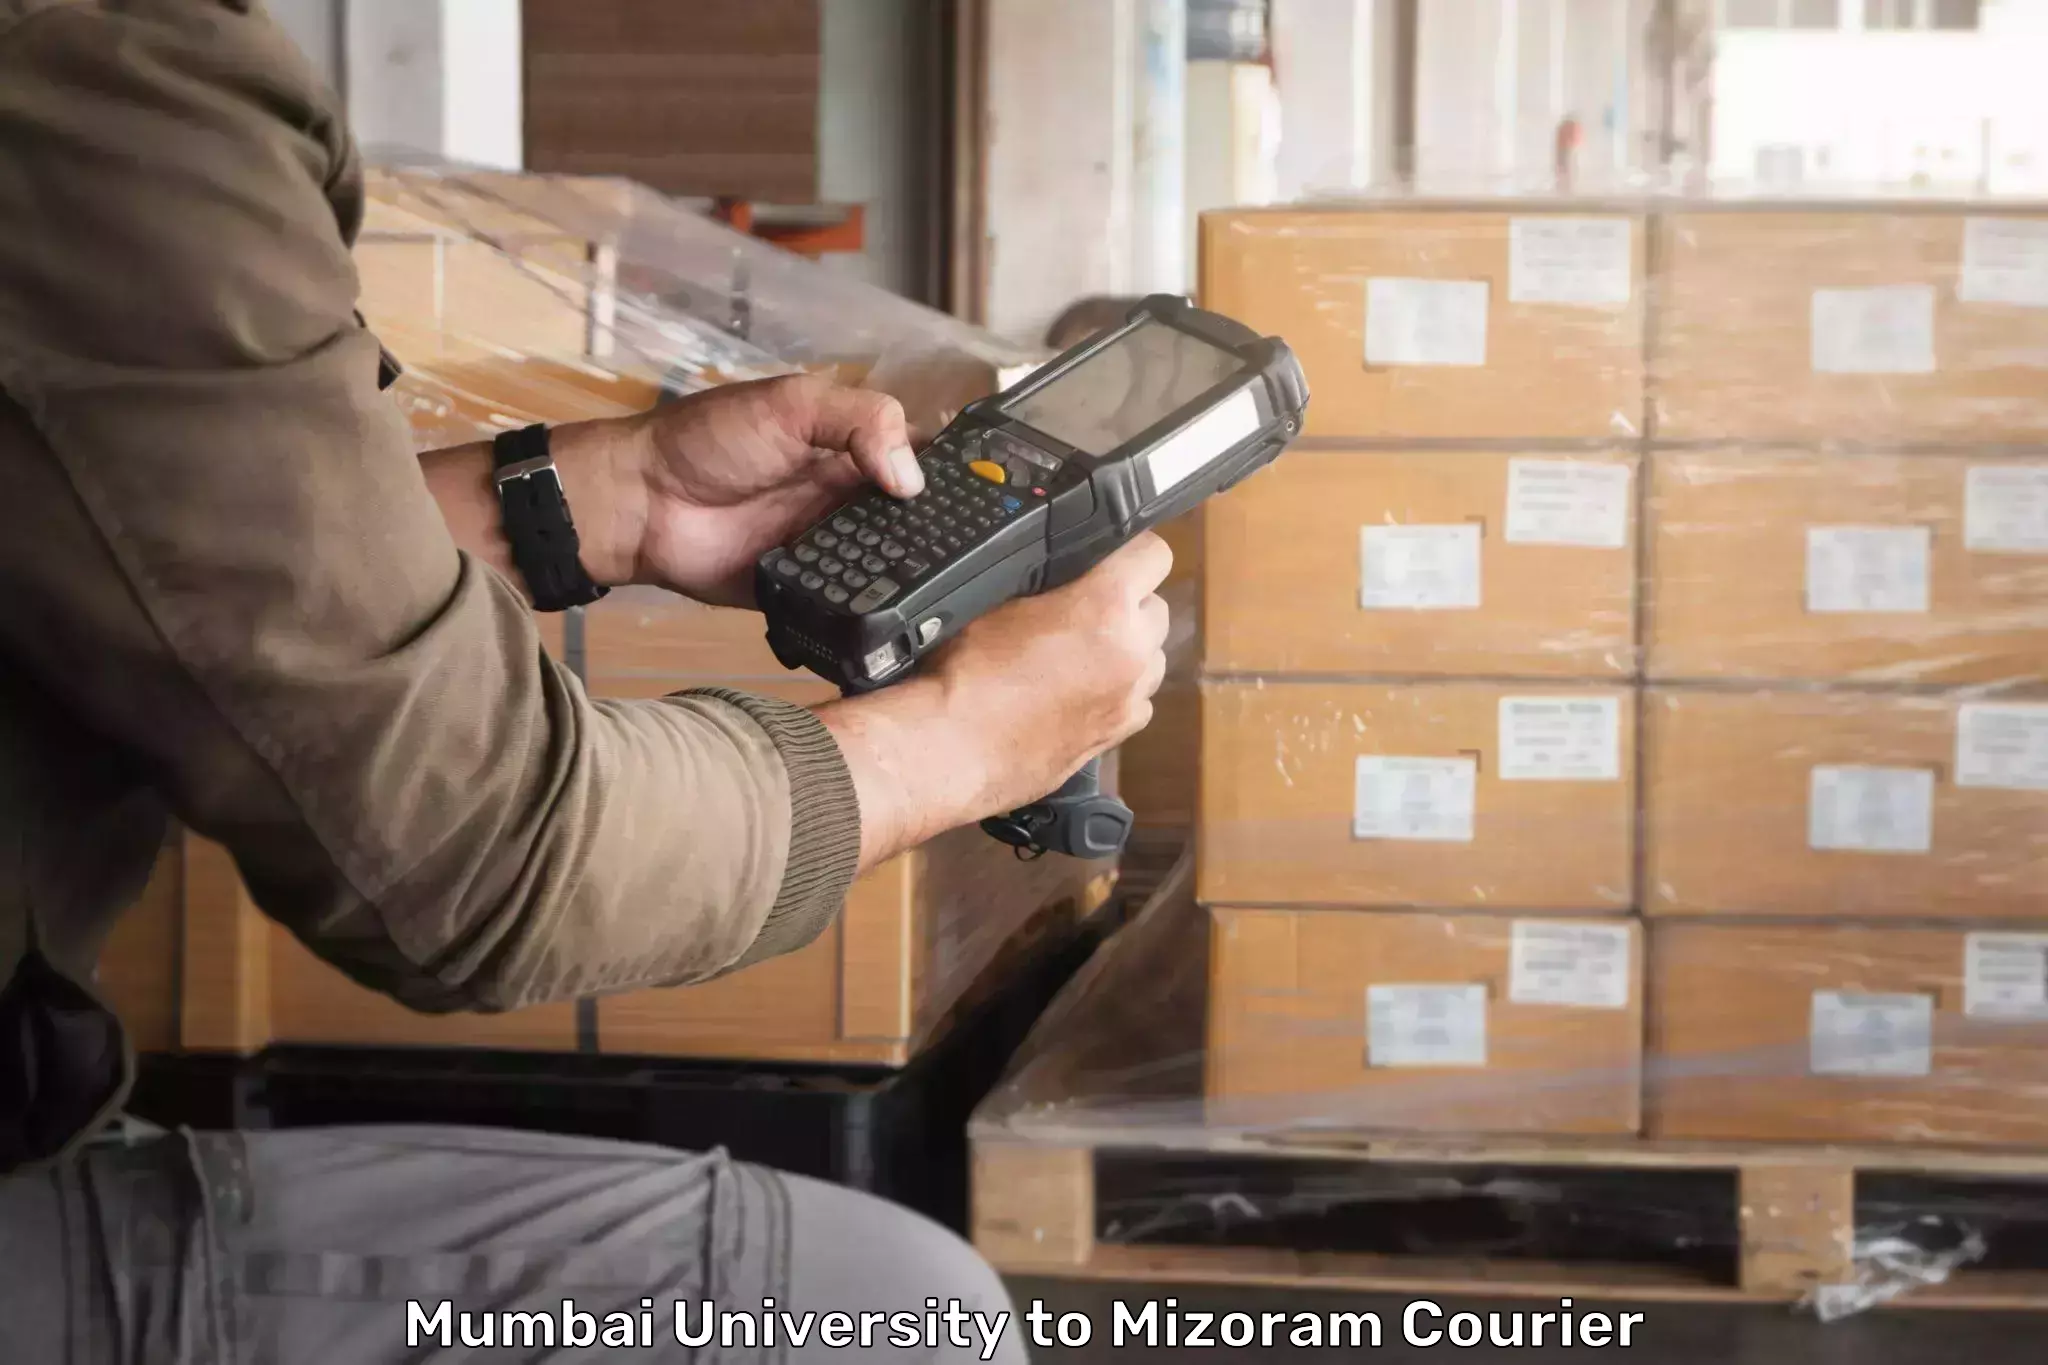 Global logistics network Mumbai University to Mizoram